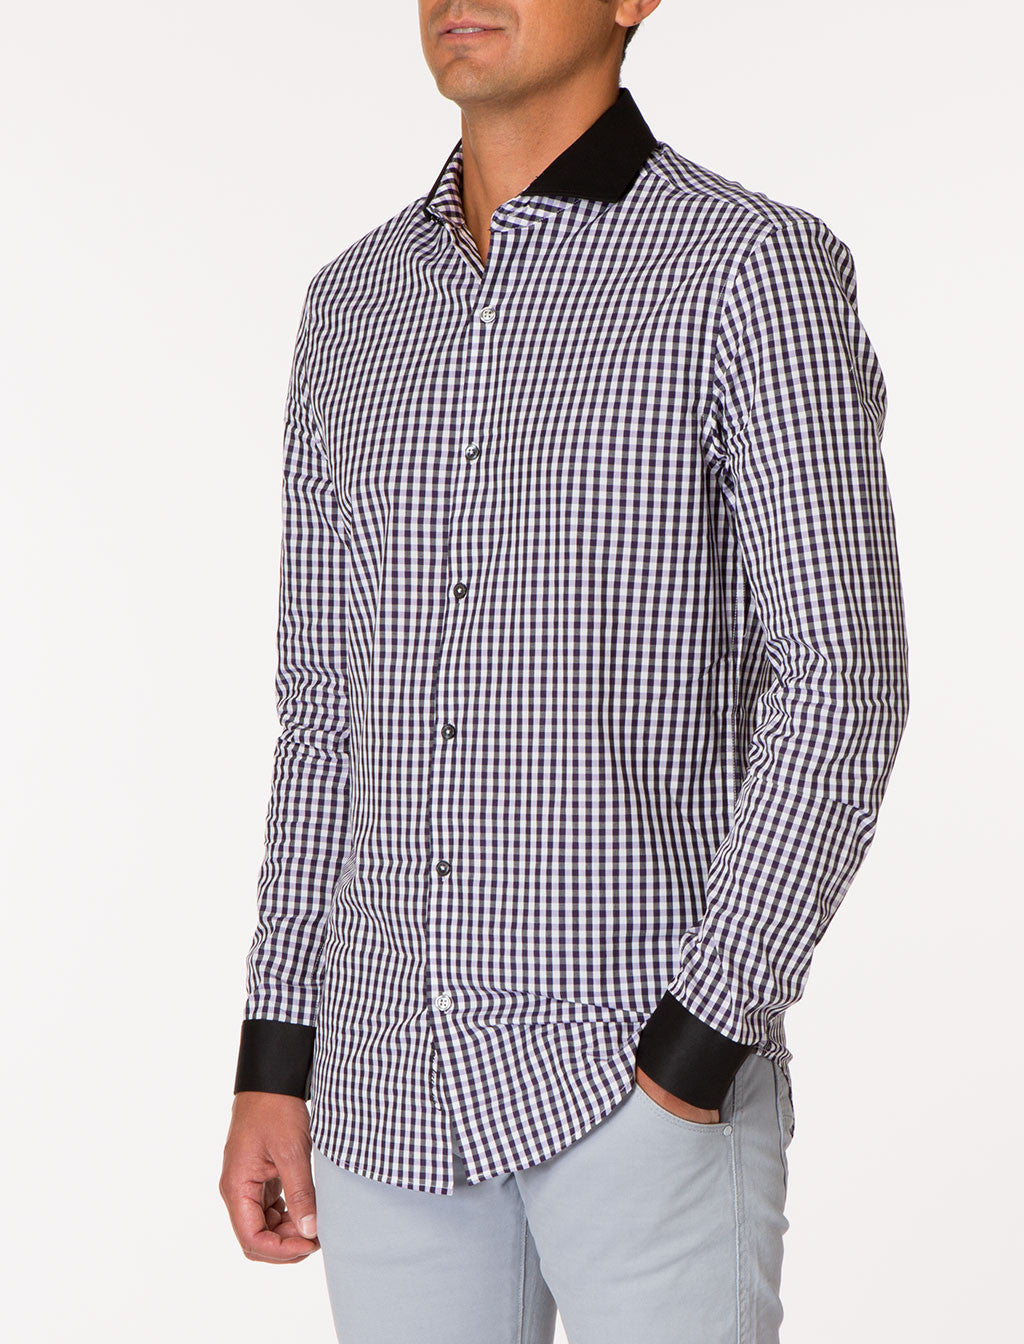 BINKS Classic Long Sleeve Woven Plaid Shirt | Tops | Shop | 227 World